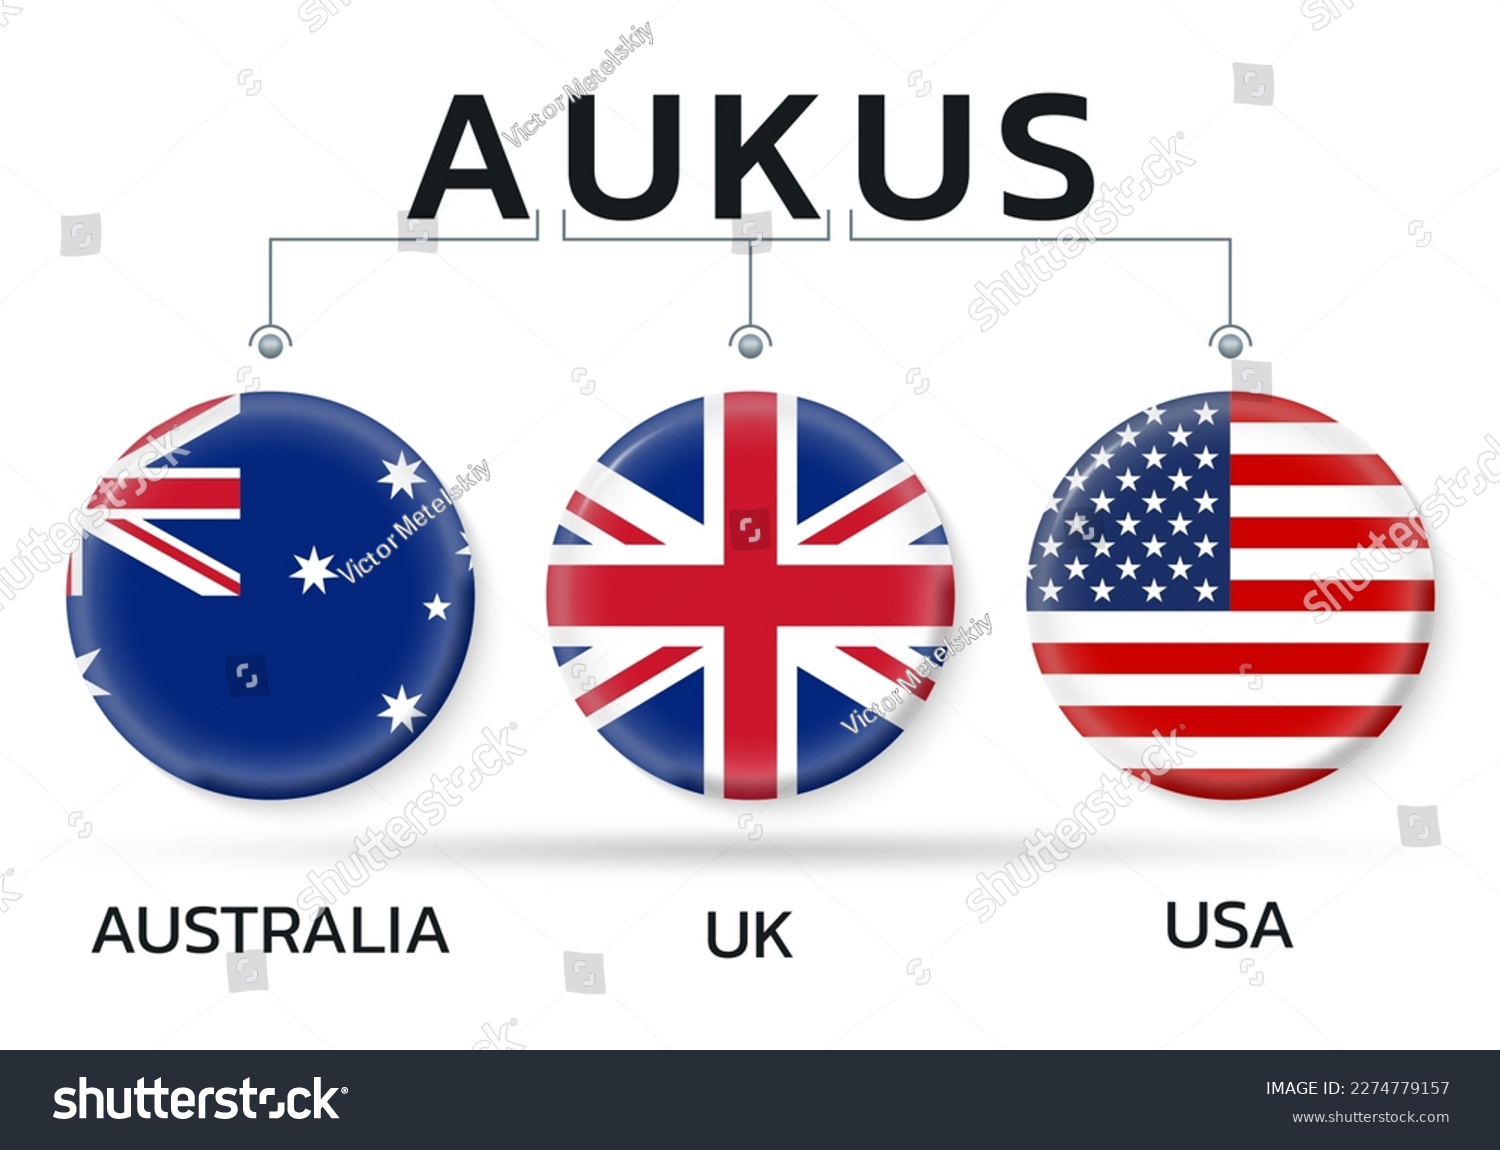 SVG of AUKUS banner with USA, UK, Australia flag icons. American, British, Australian security alliance pact design. Vector illustration. svg